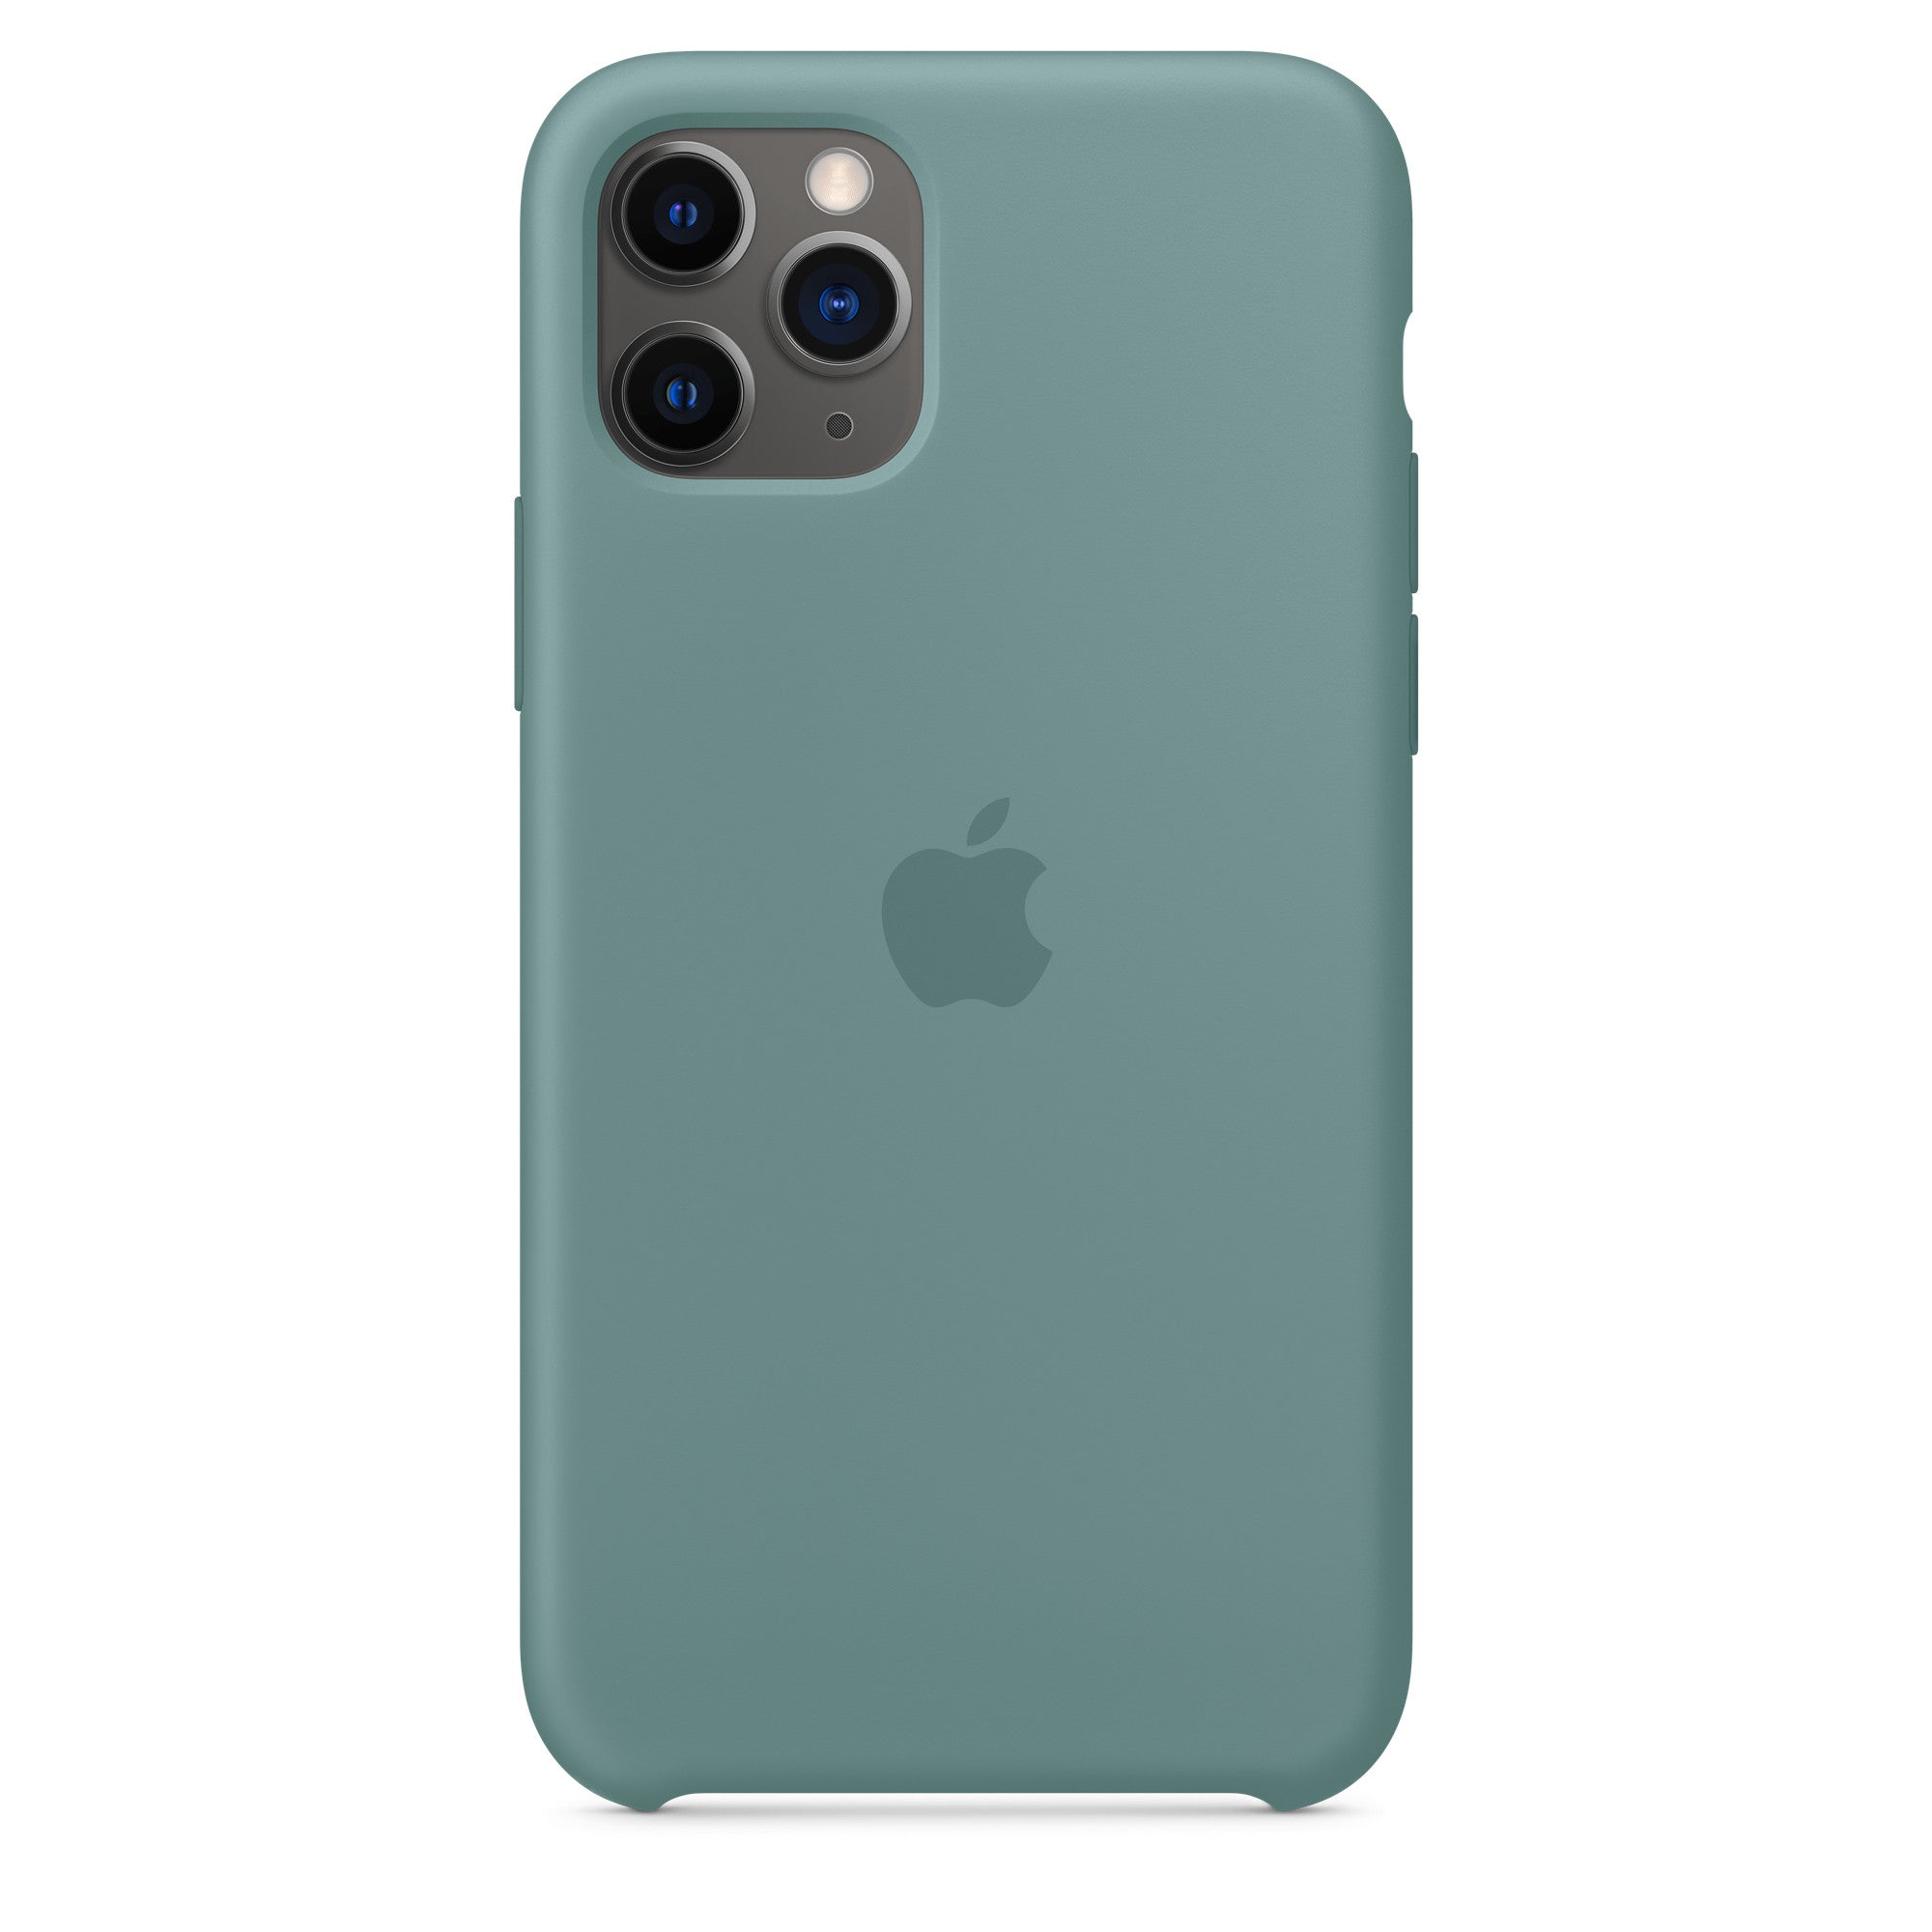 Apple iPhone 11 Pro Silicone Case - Cactus - Brand New